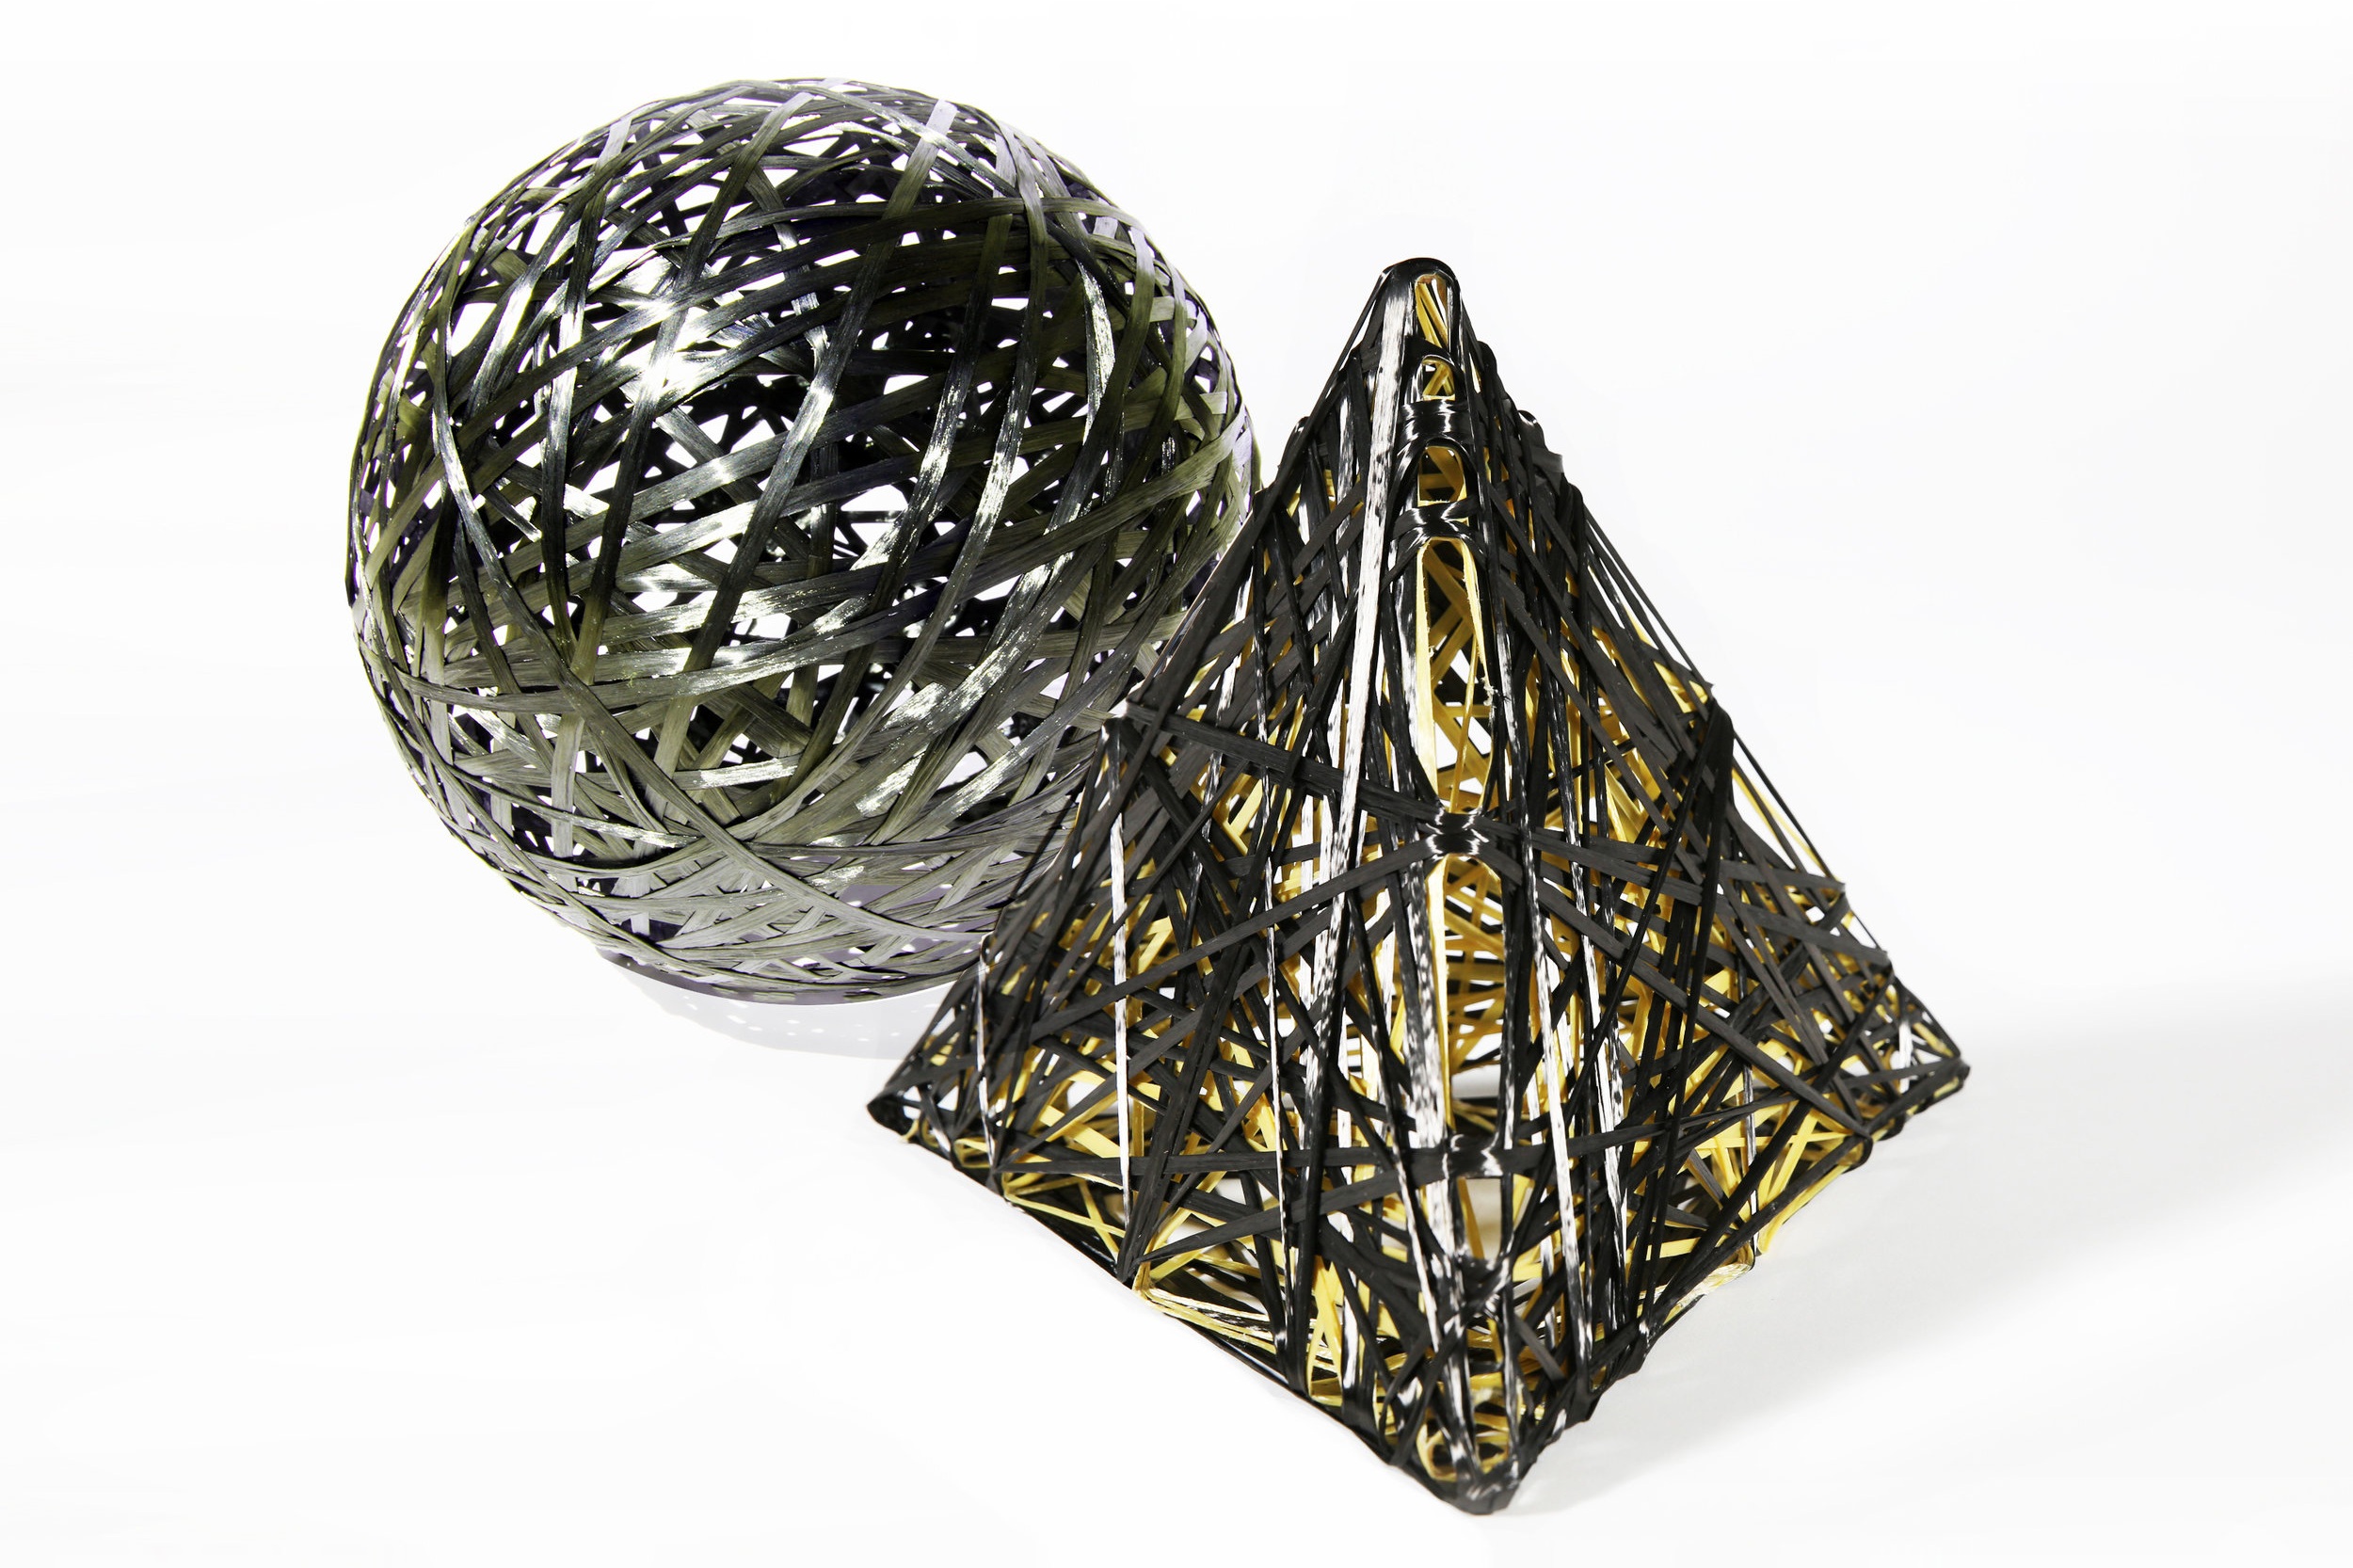 tetrahedron and sphere.jpg